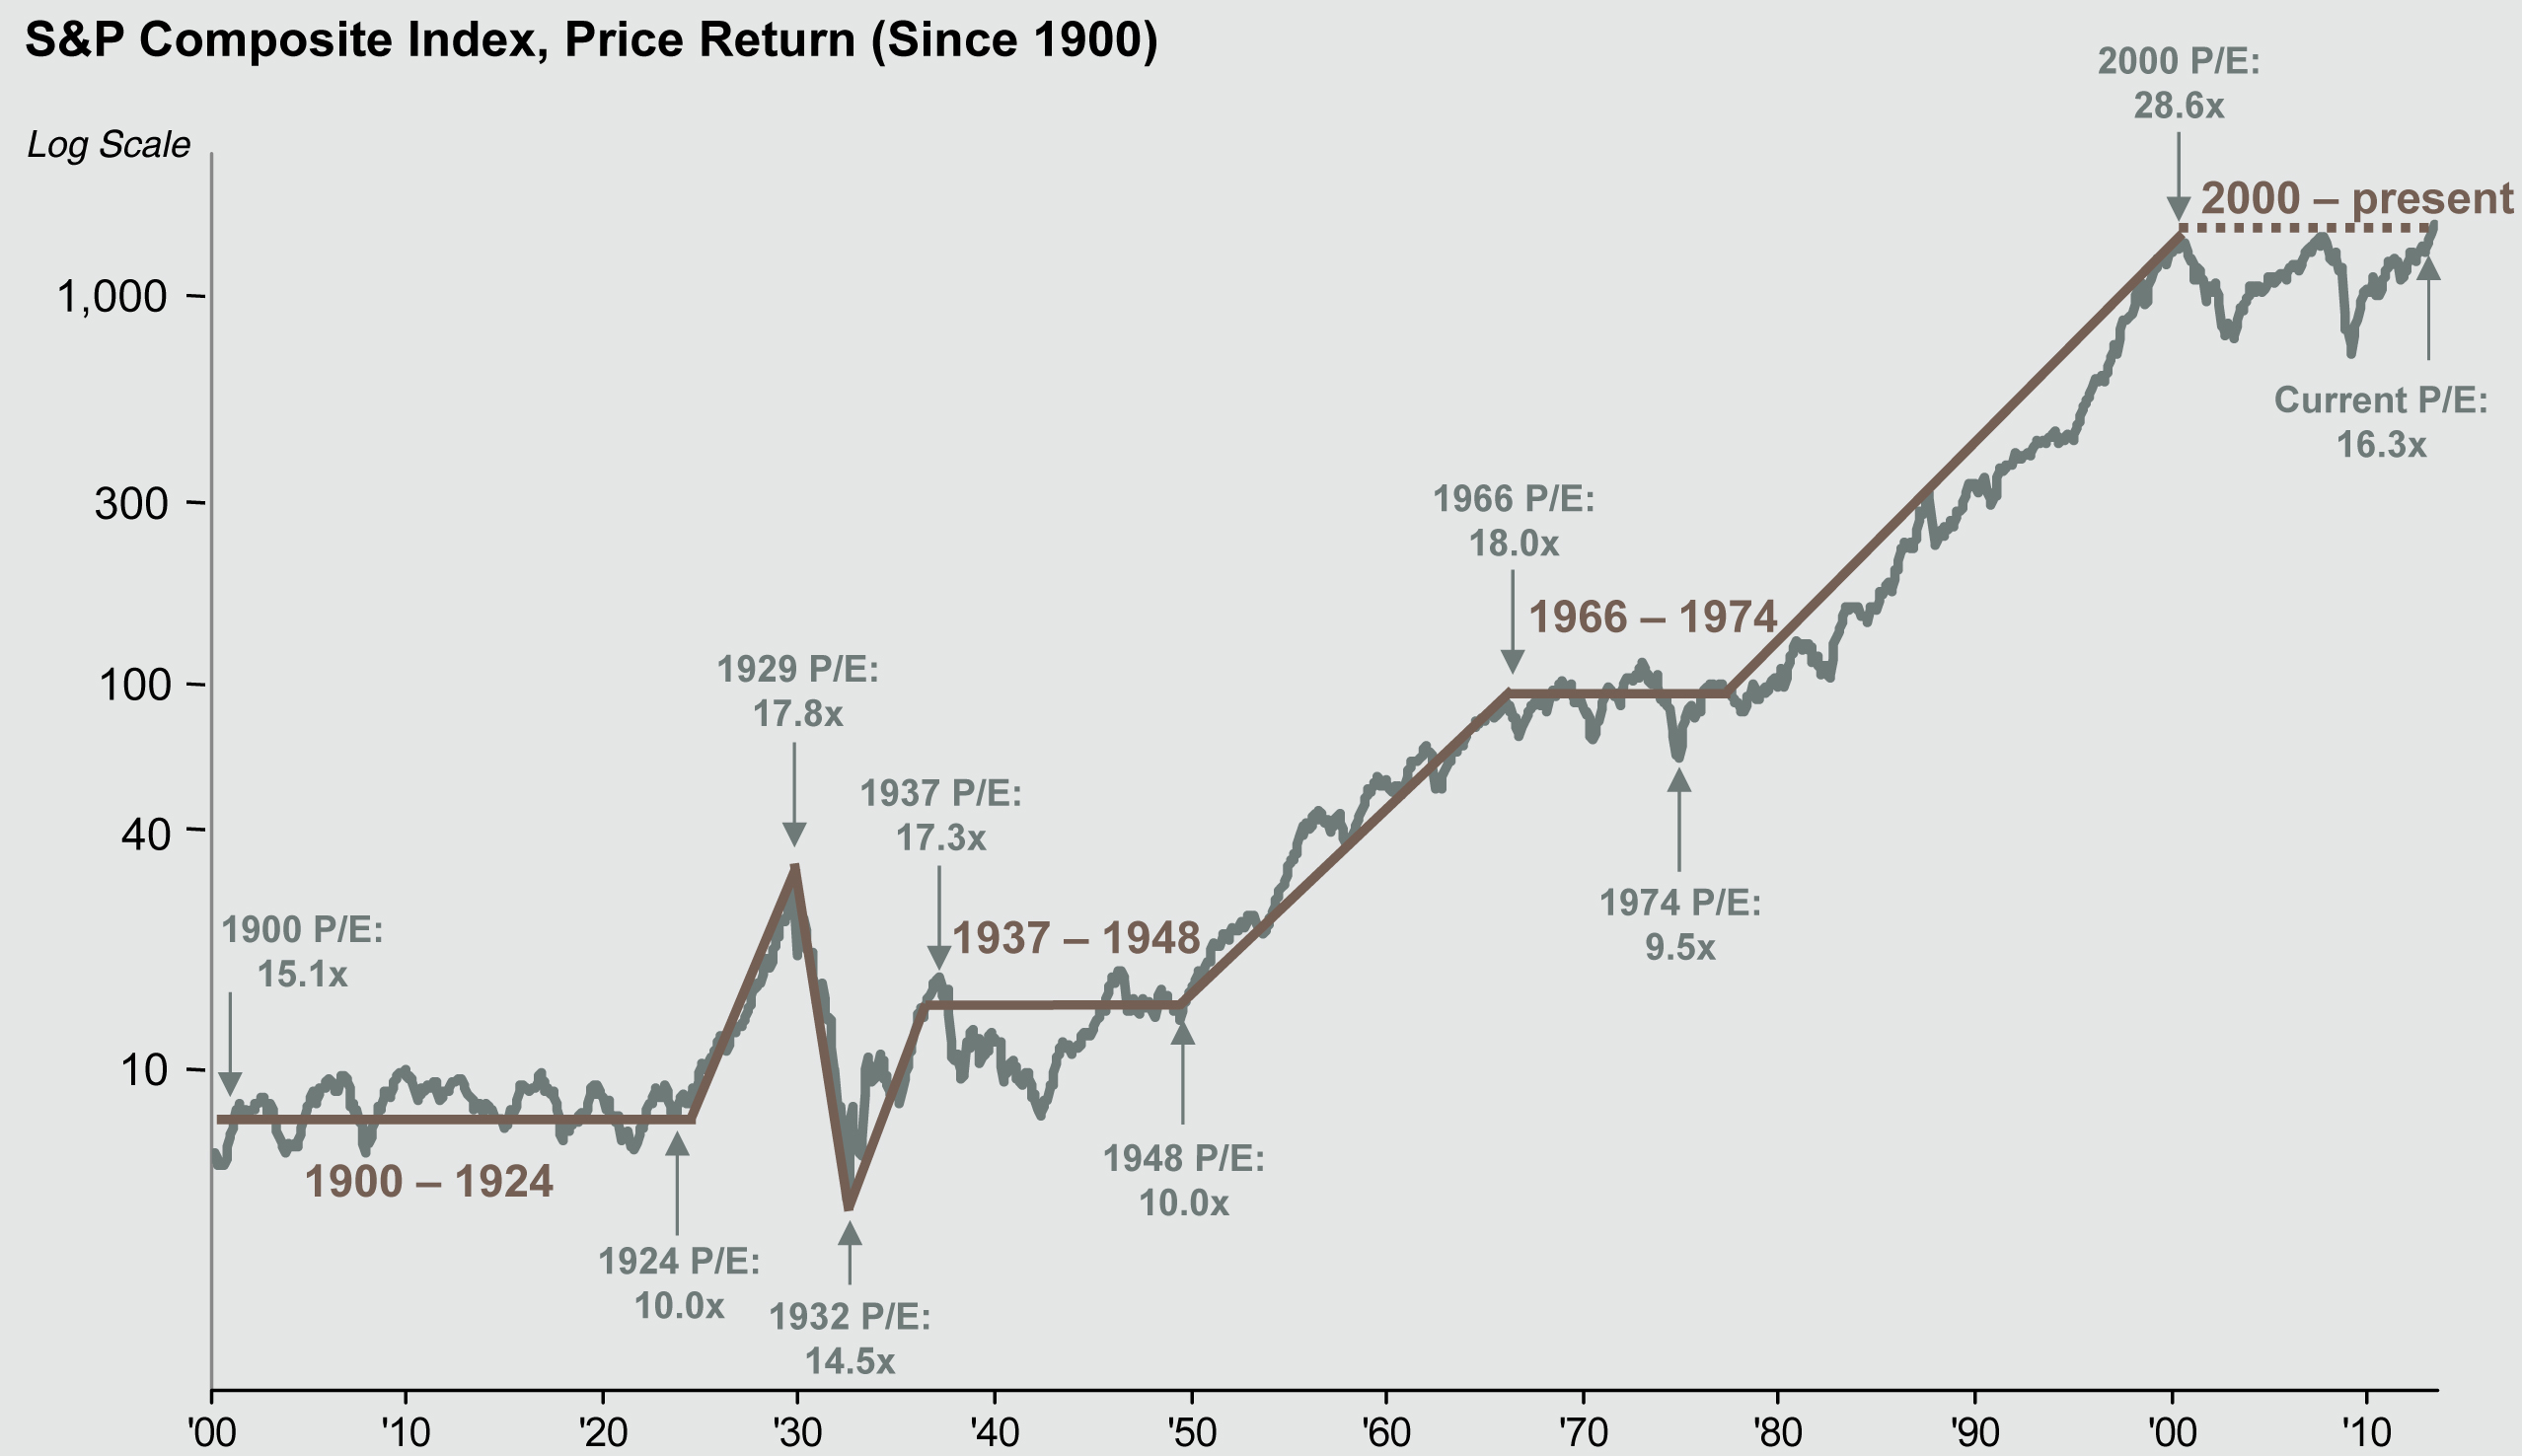 Stock Market Price Return Since 1900